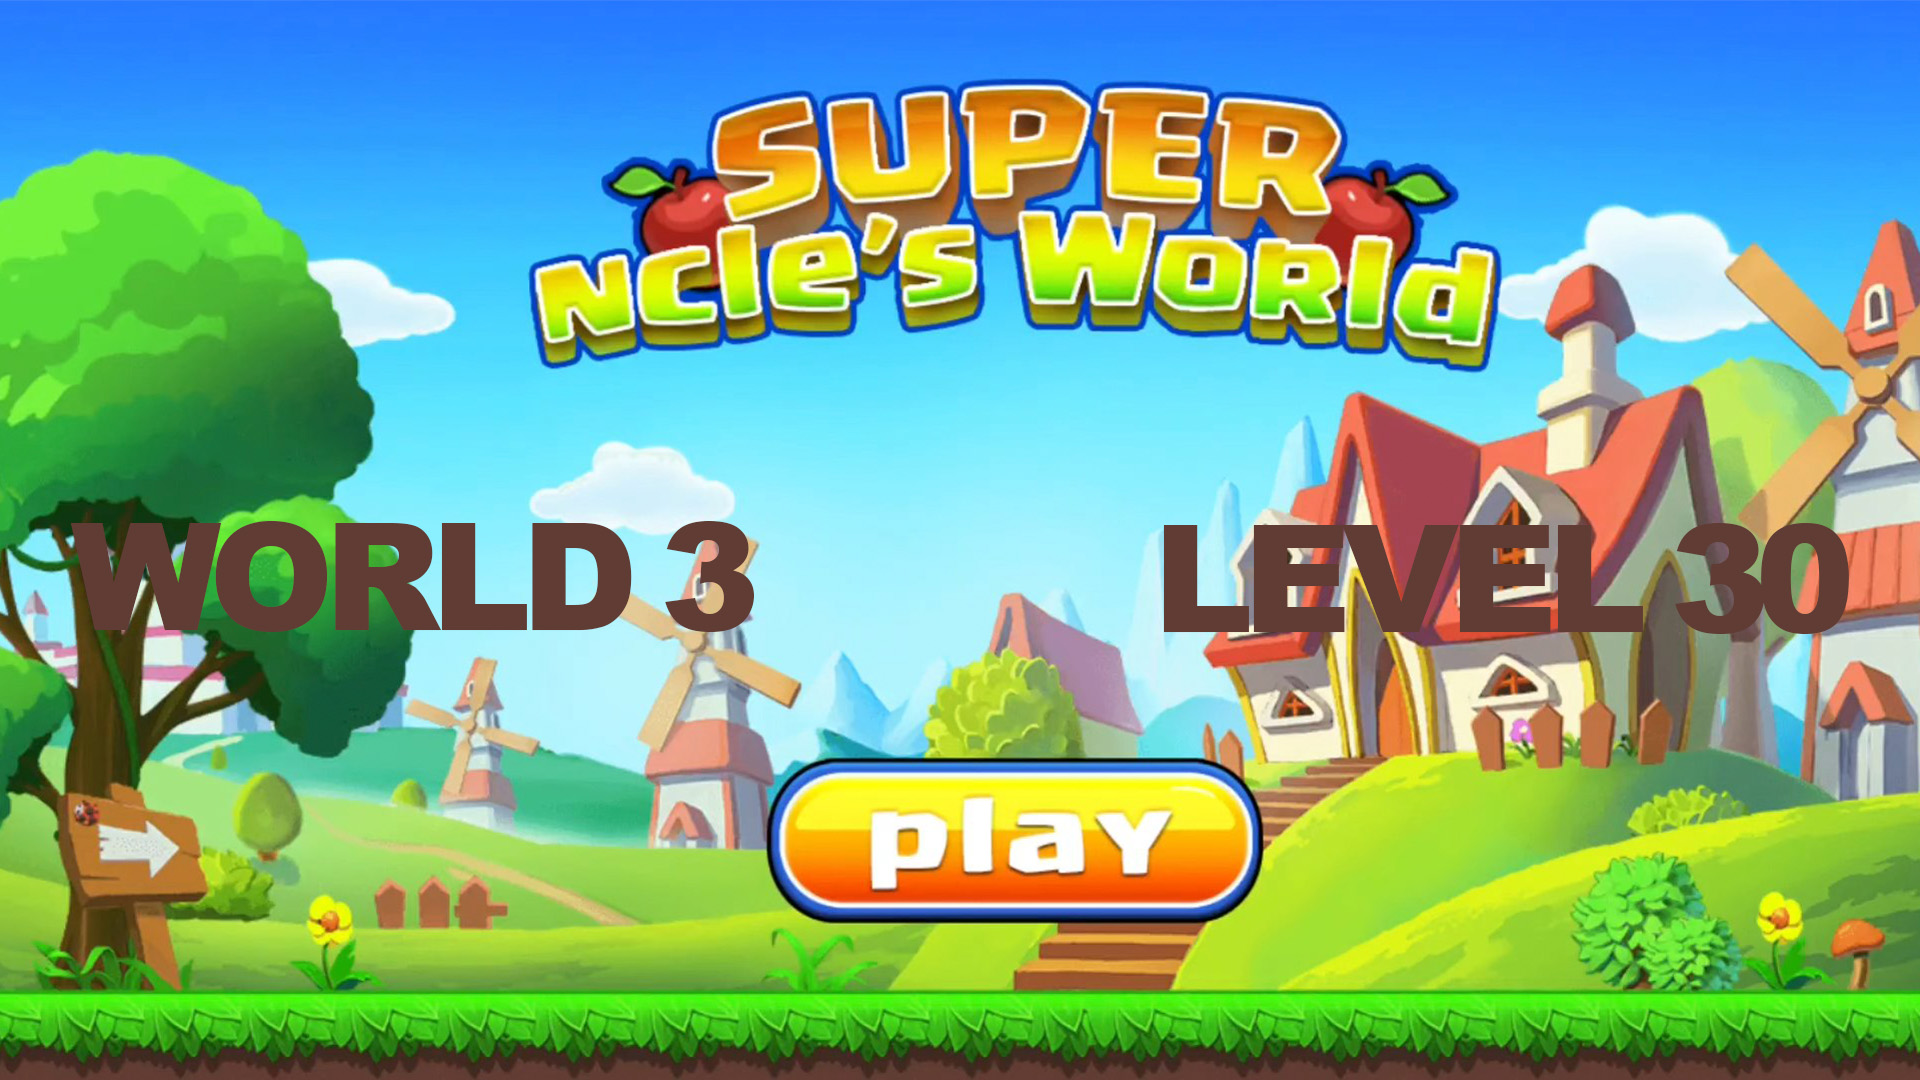 Super ncle's  World 3. Level 30.